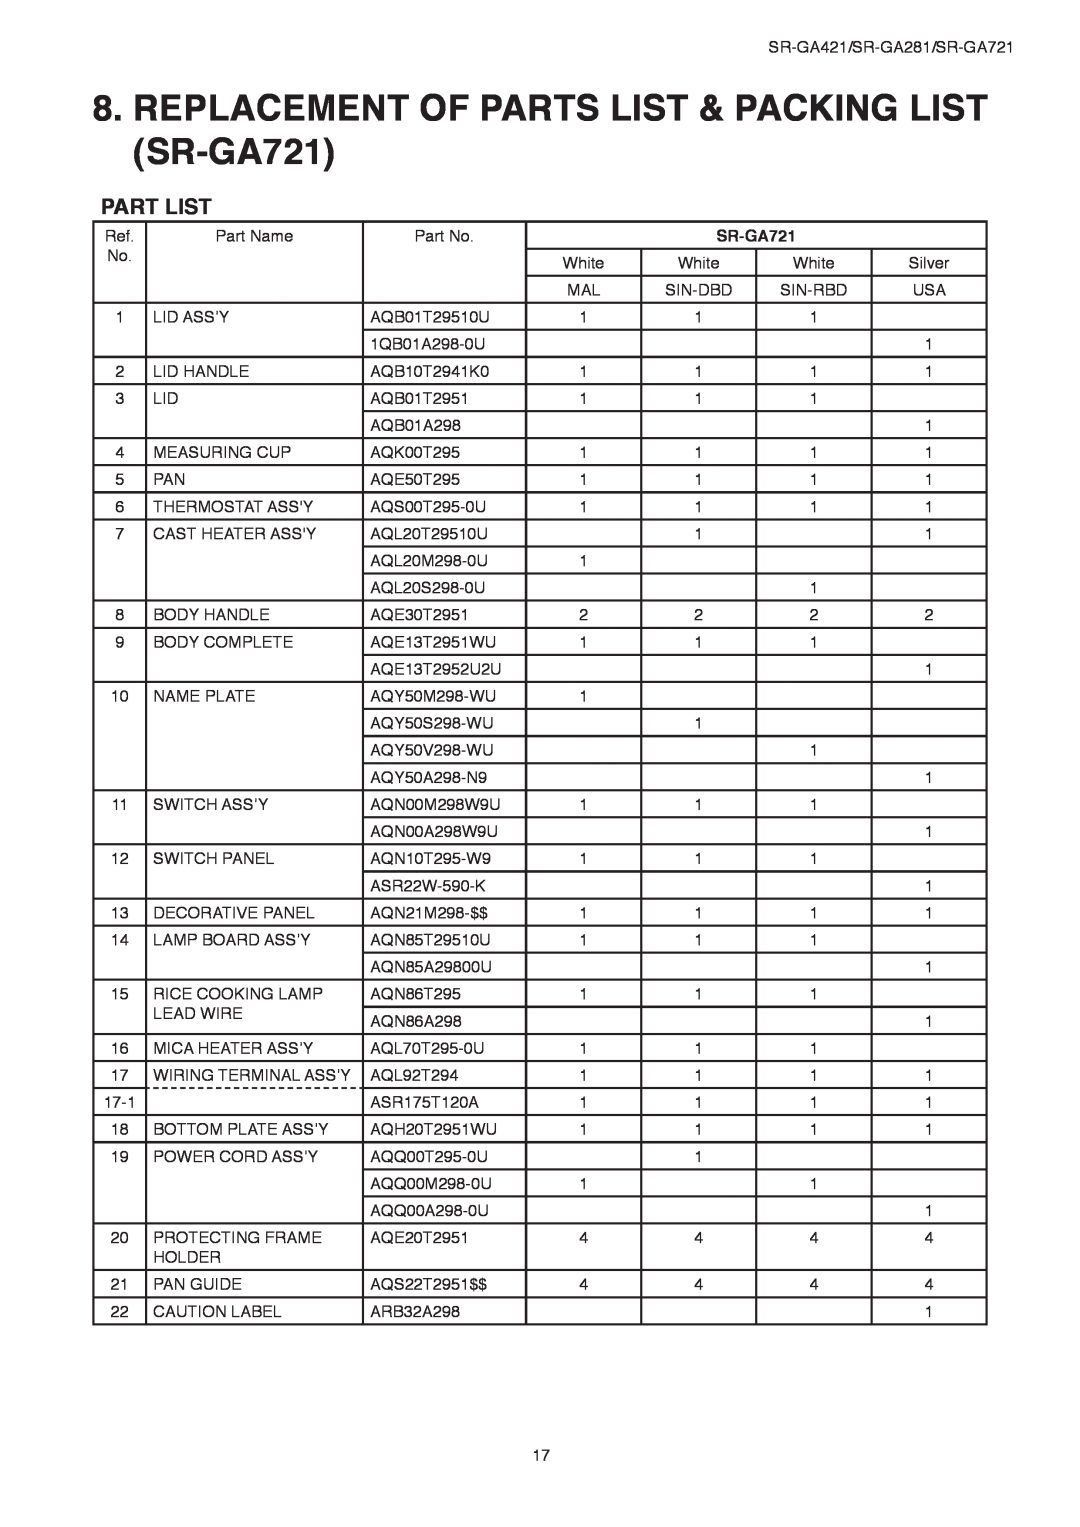 Panasonic SR-GA421, SR-GA281 service manual REPLACEMENT OF PARTS LIST & PACKING LIST SR-GA721, Part List 